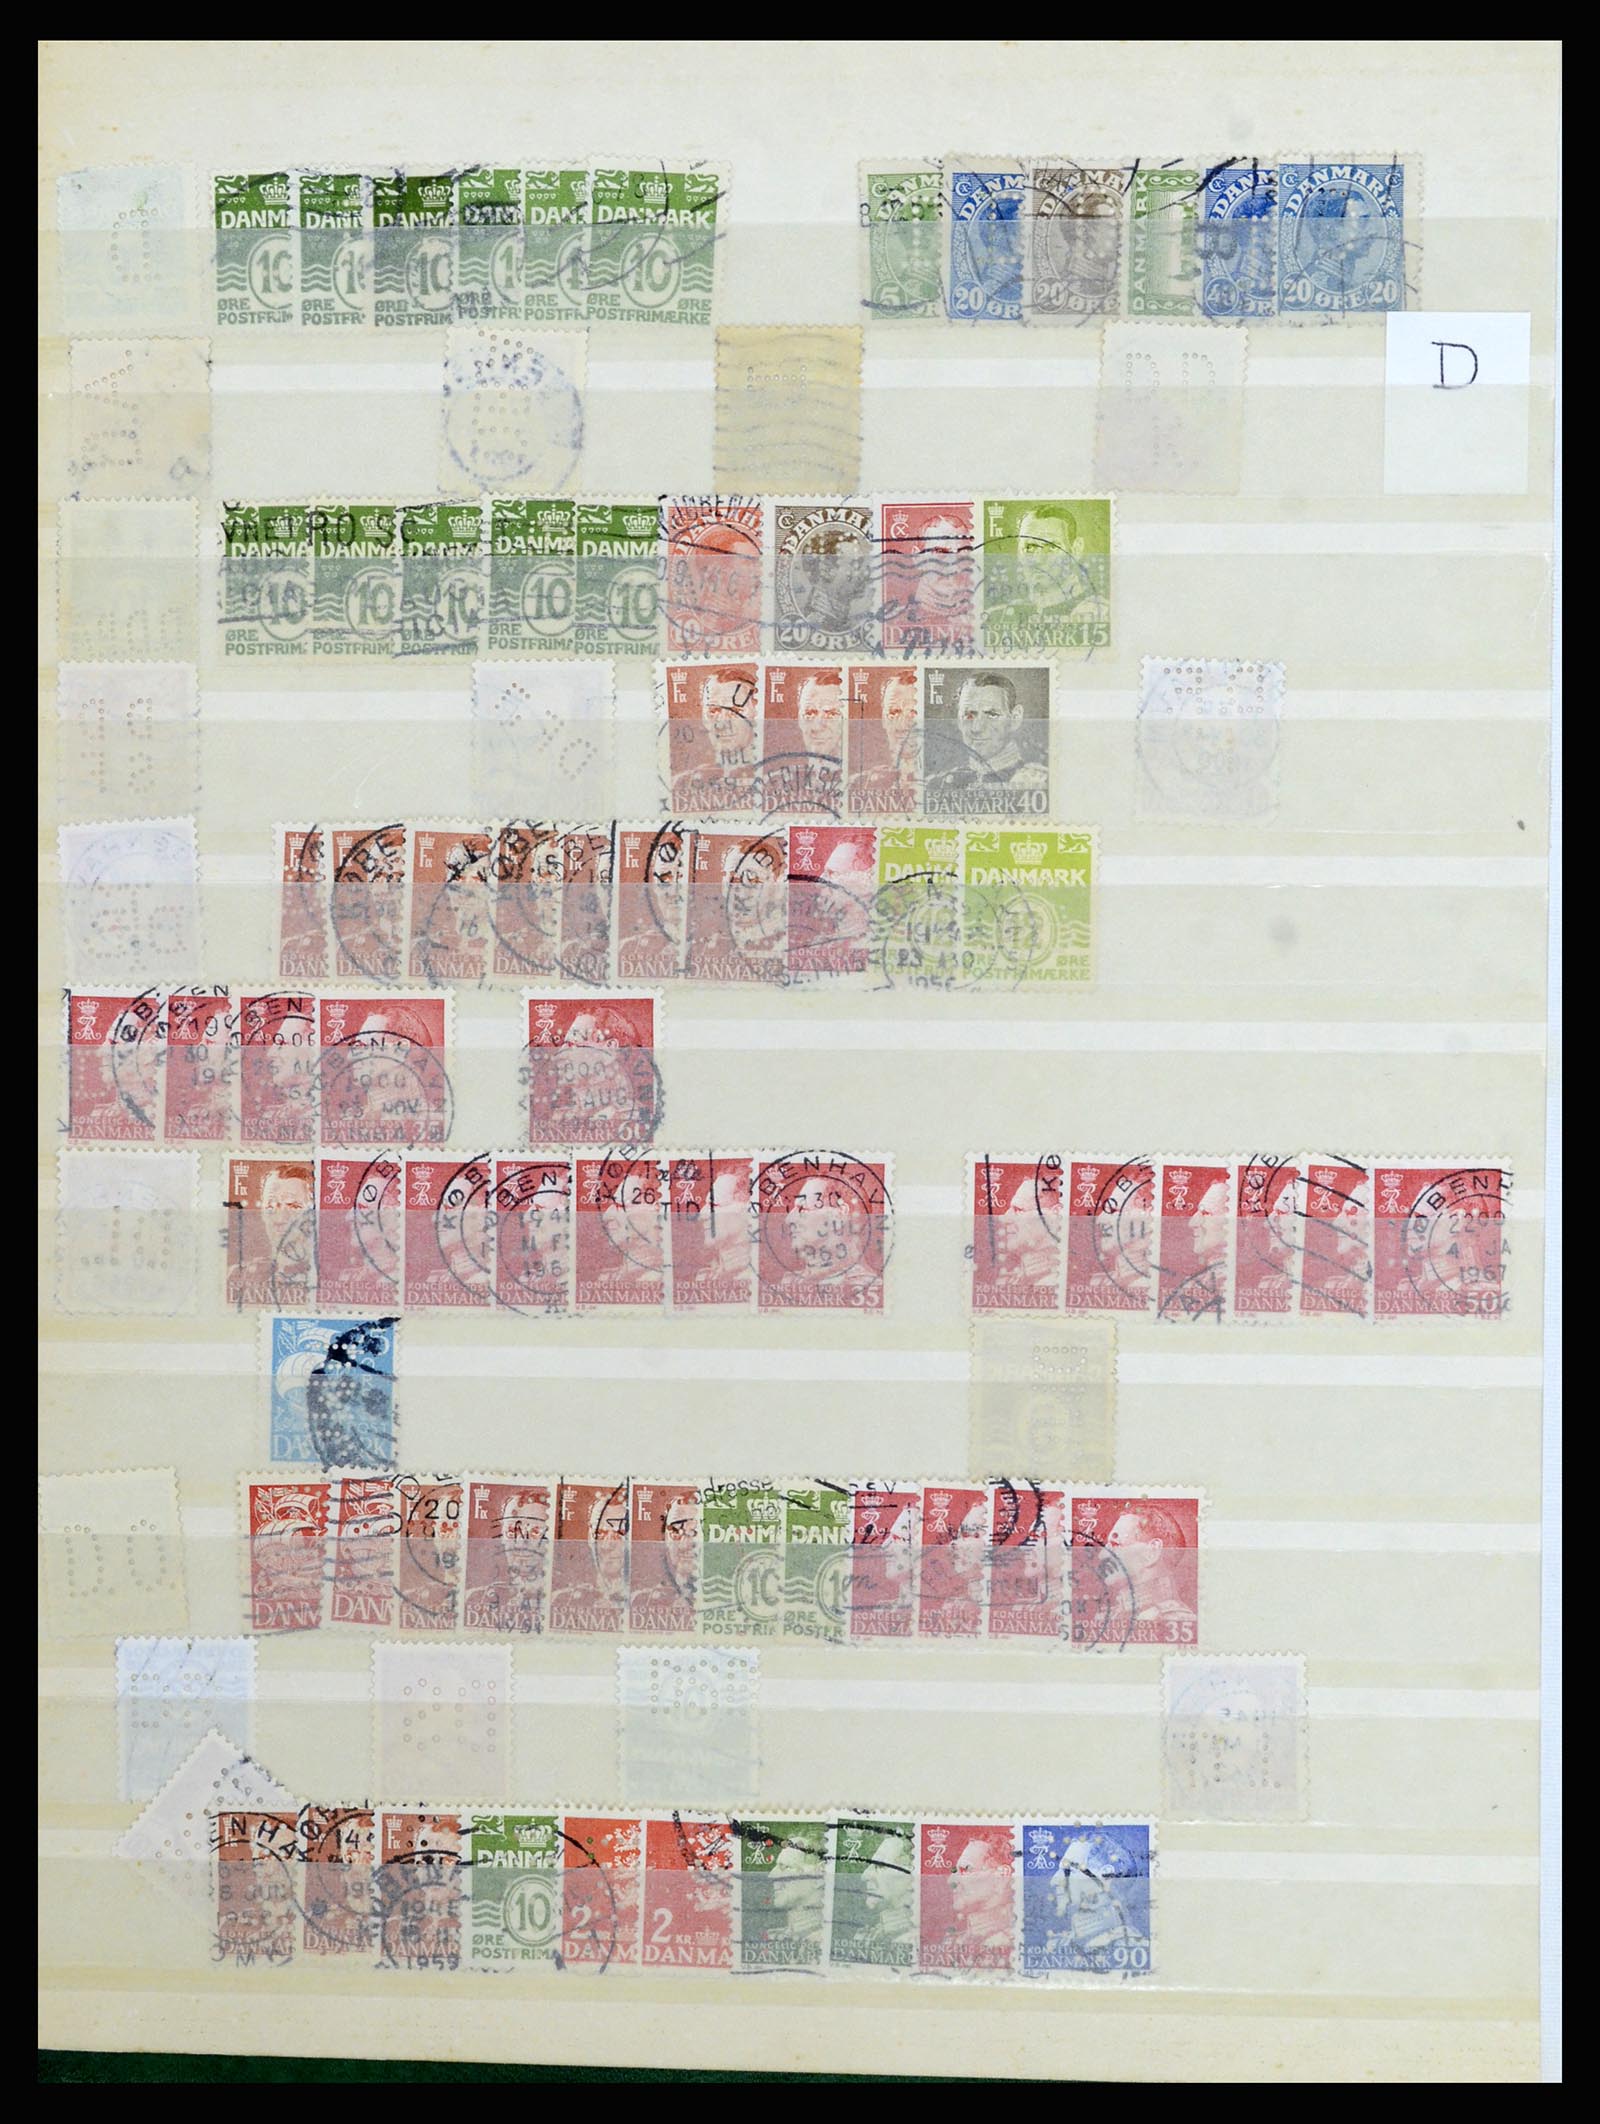 37056 070 - Stamp collection 37056 Denmark perfins.